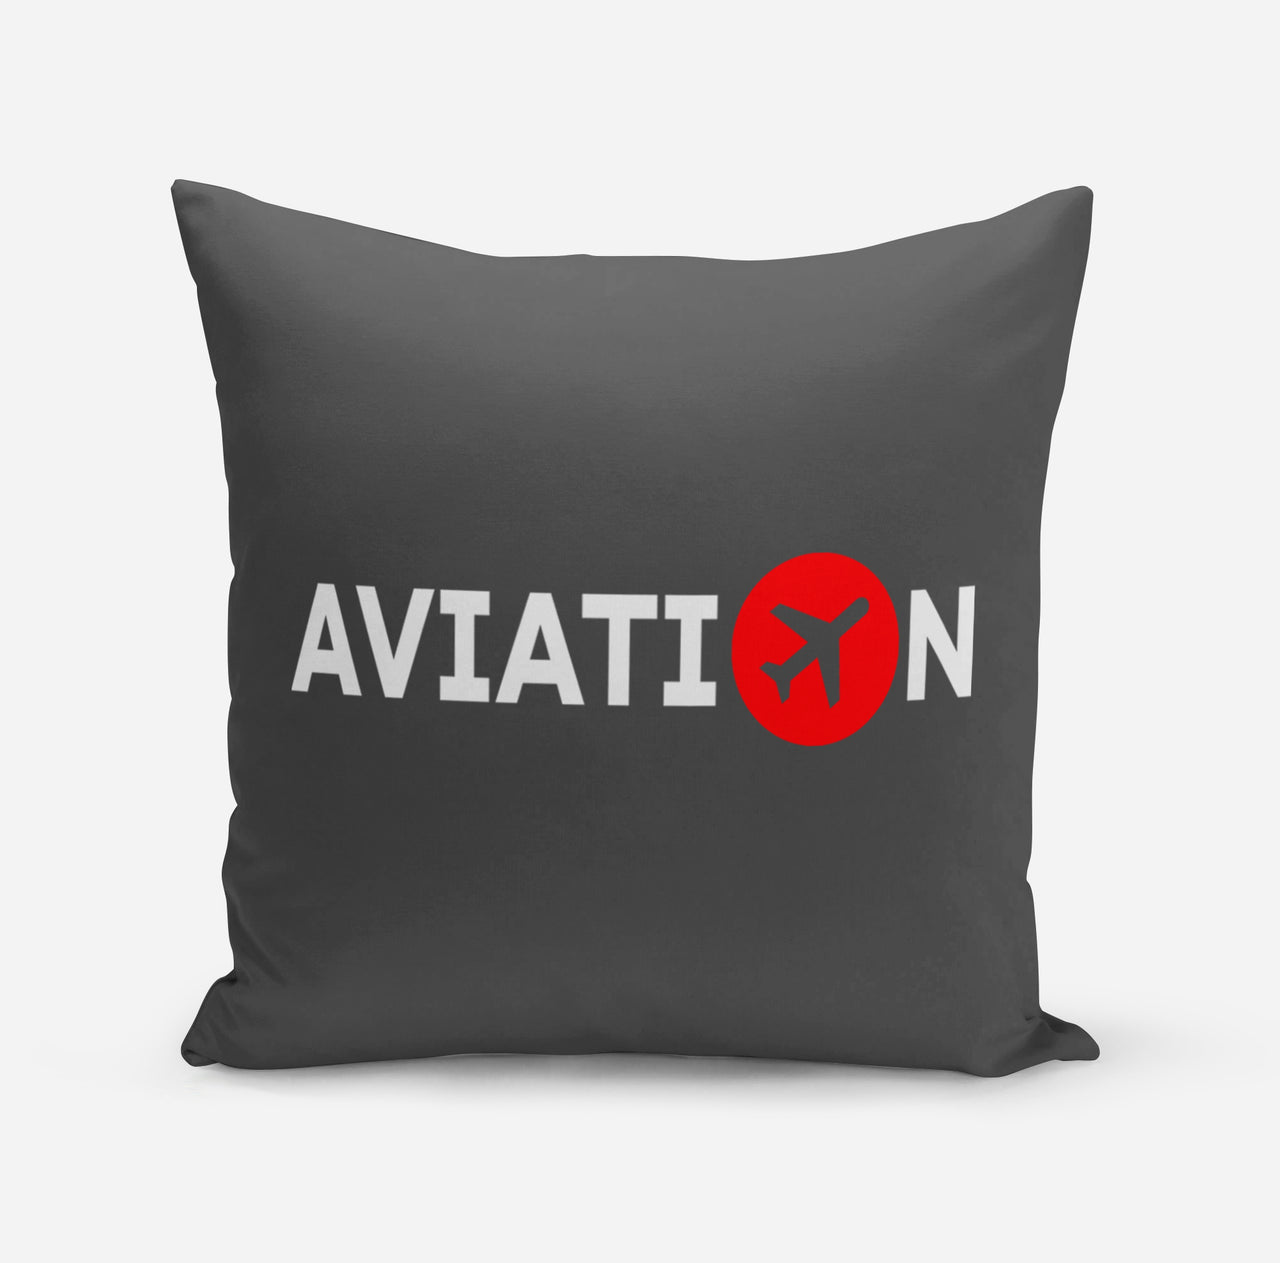 Aviation Designed Pillows